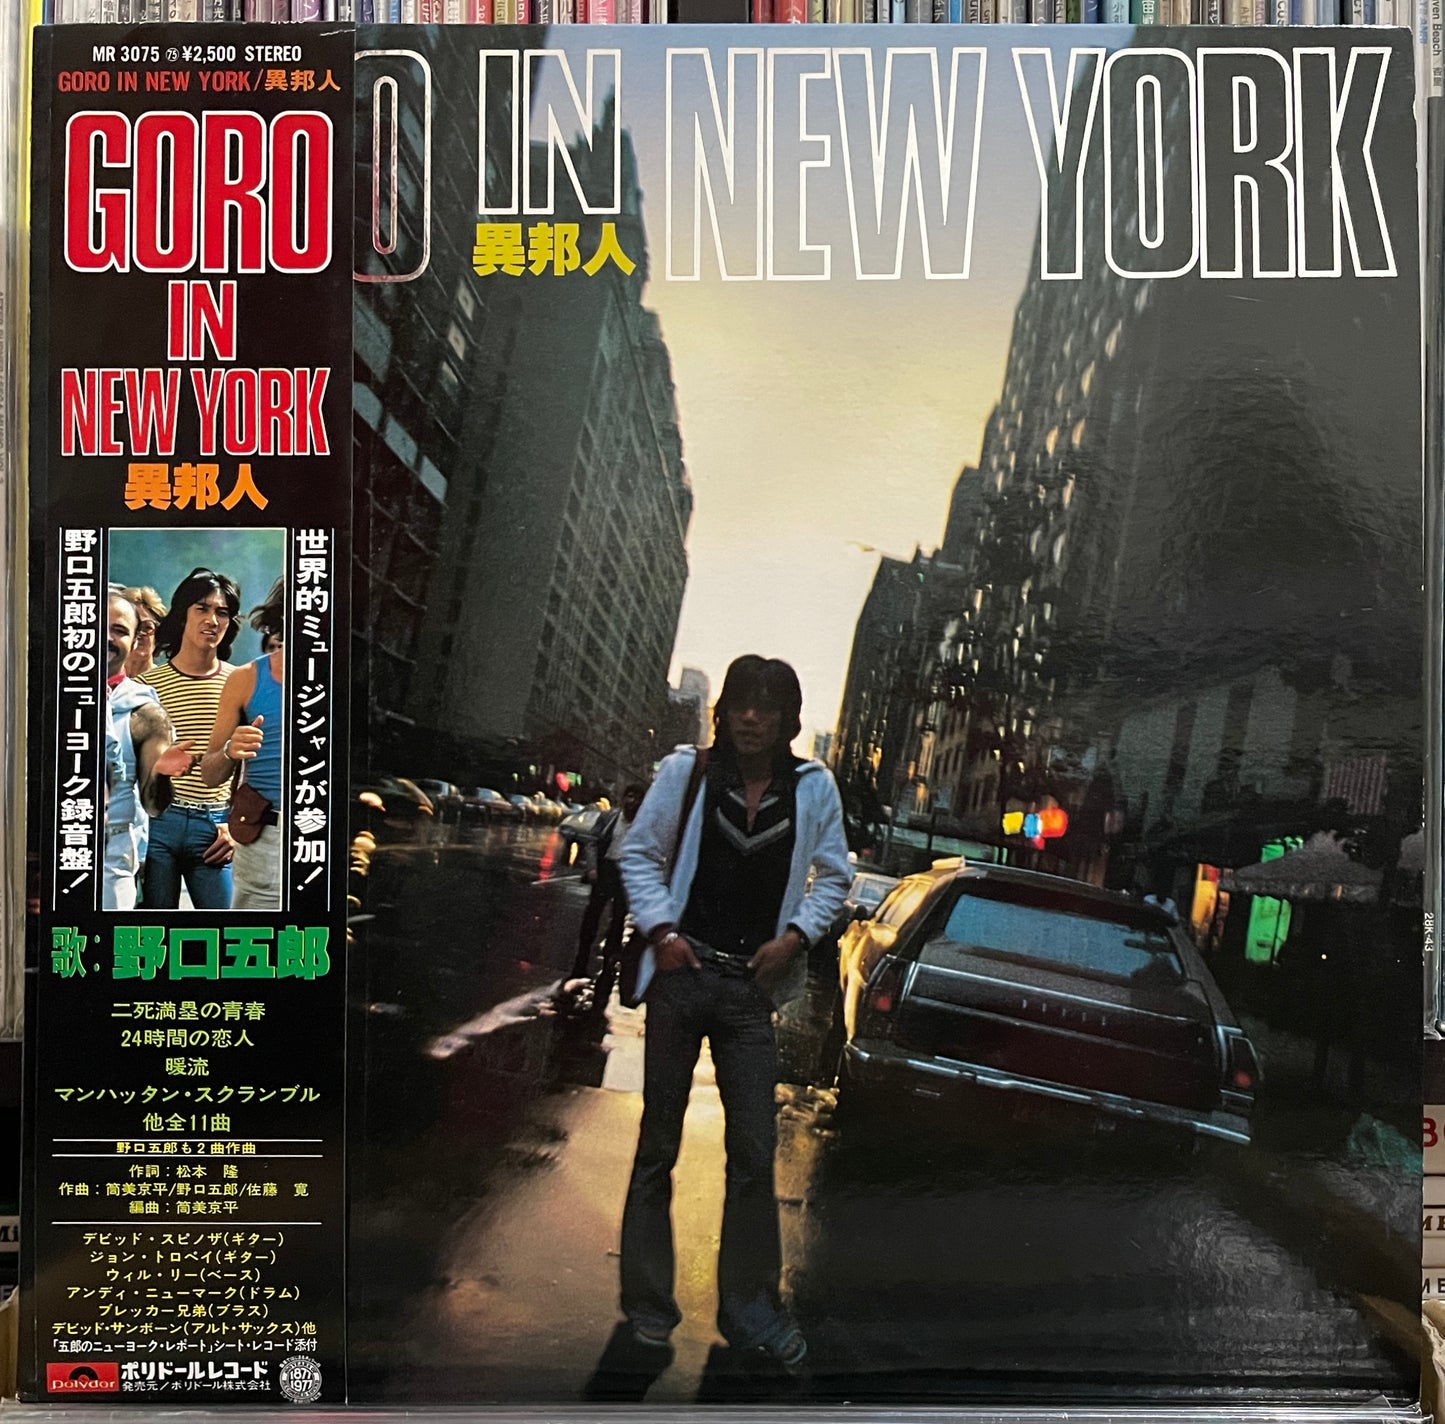 Goro Noguchi "Goro In New York" (1977)